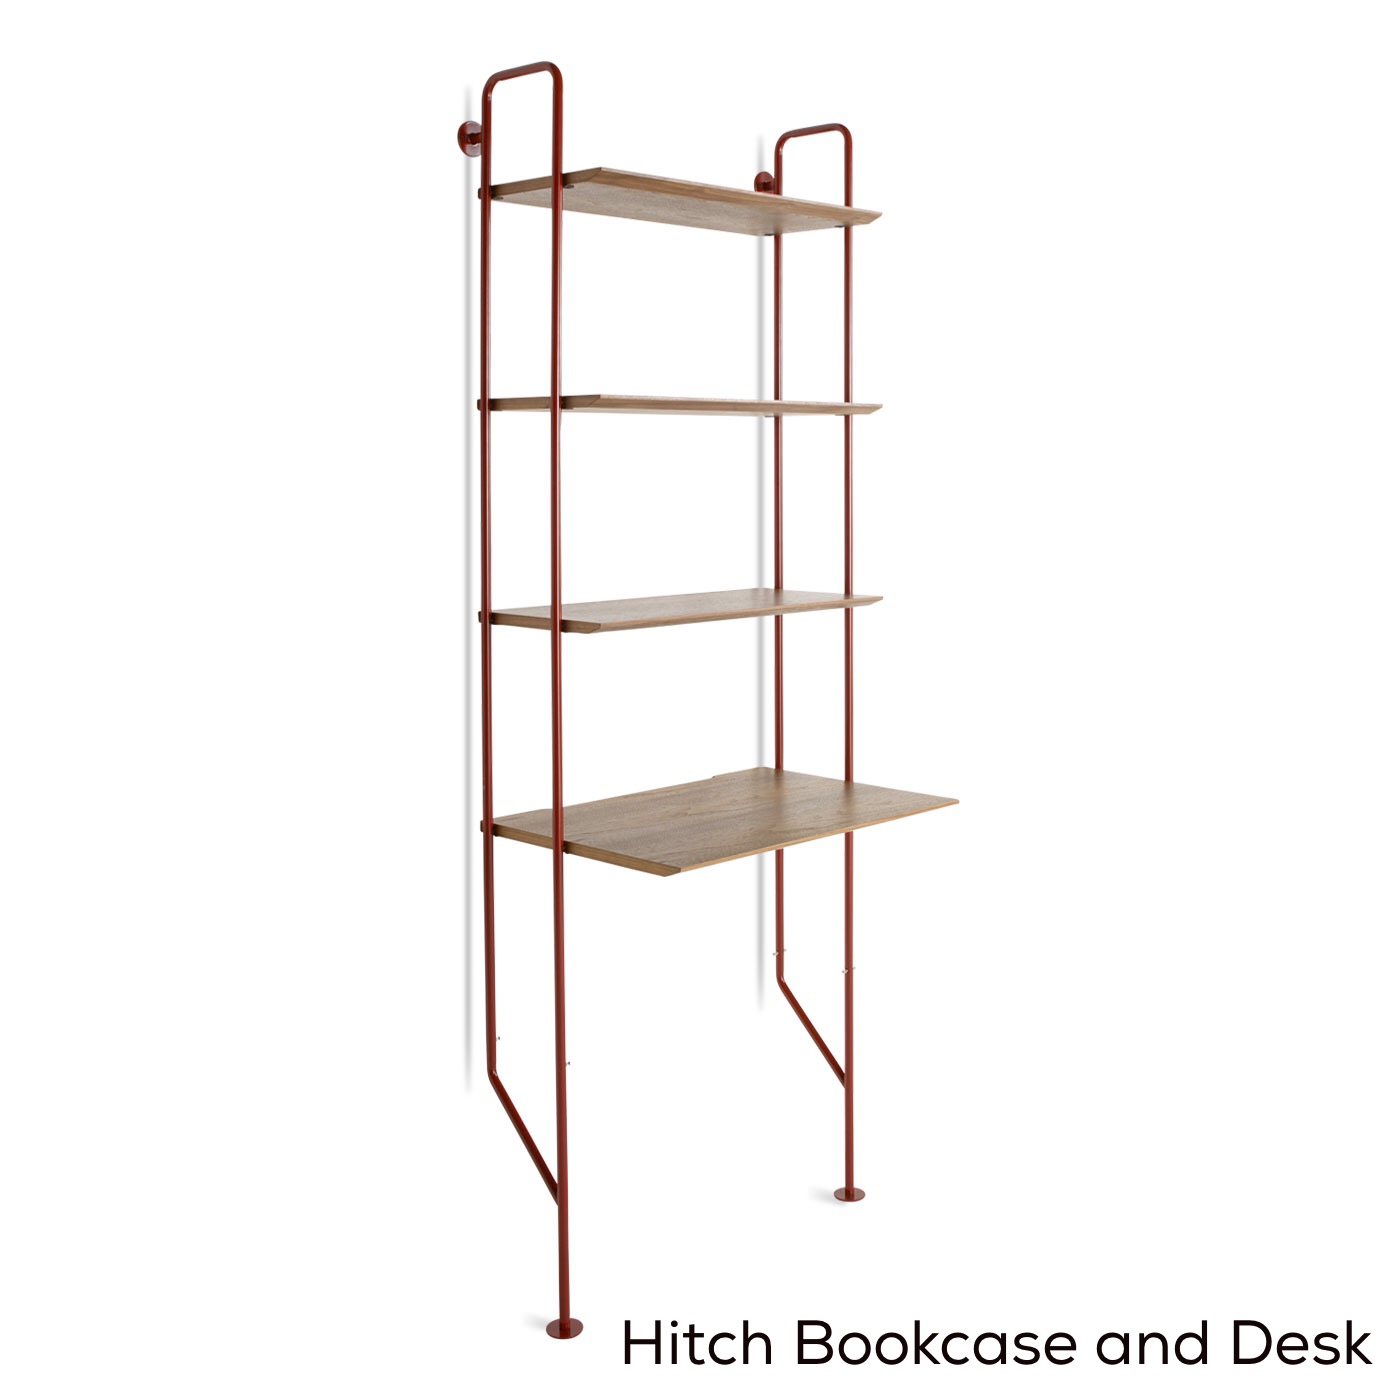 Blu Dot Hitch Bookcase and Desk